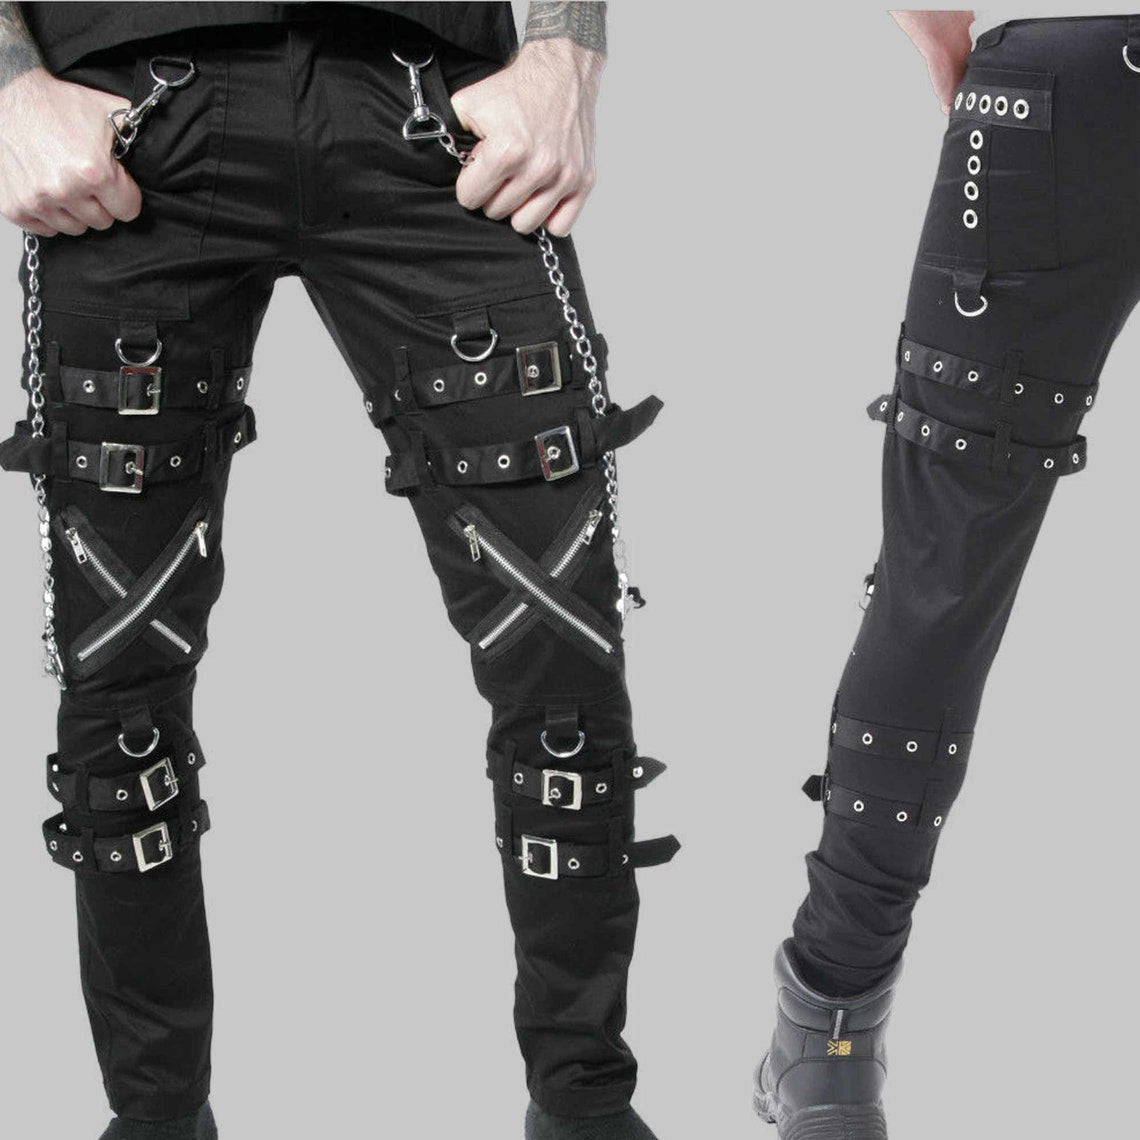 Goth Pant Dead Threads Buckles Zips Chains Straps Black Trousers Cyber Punk, bondage trouser